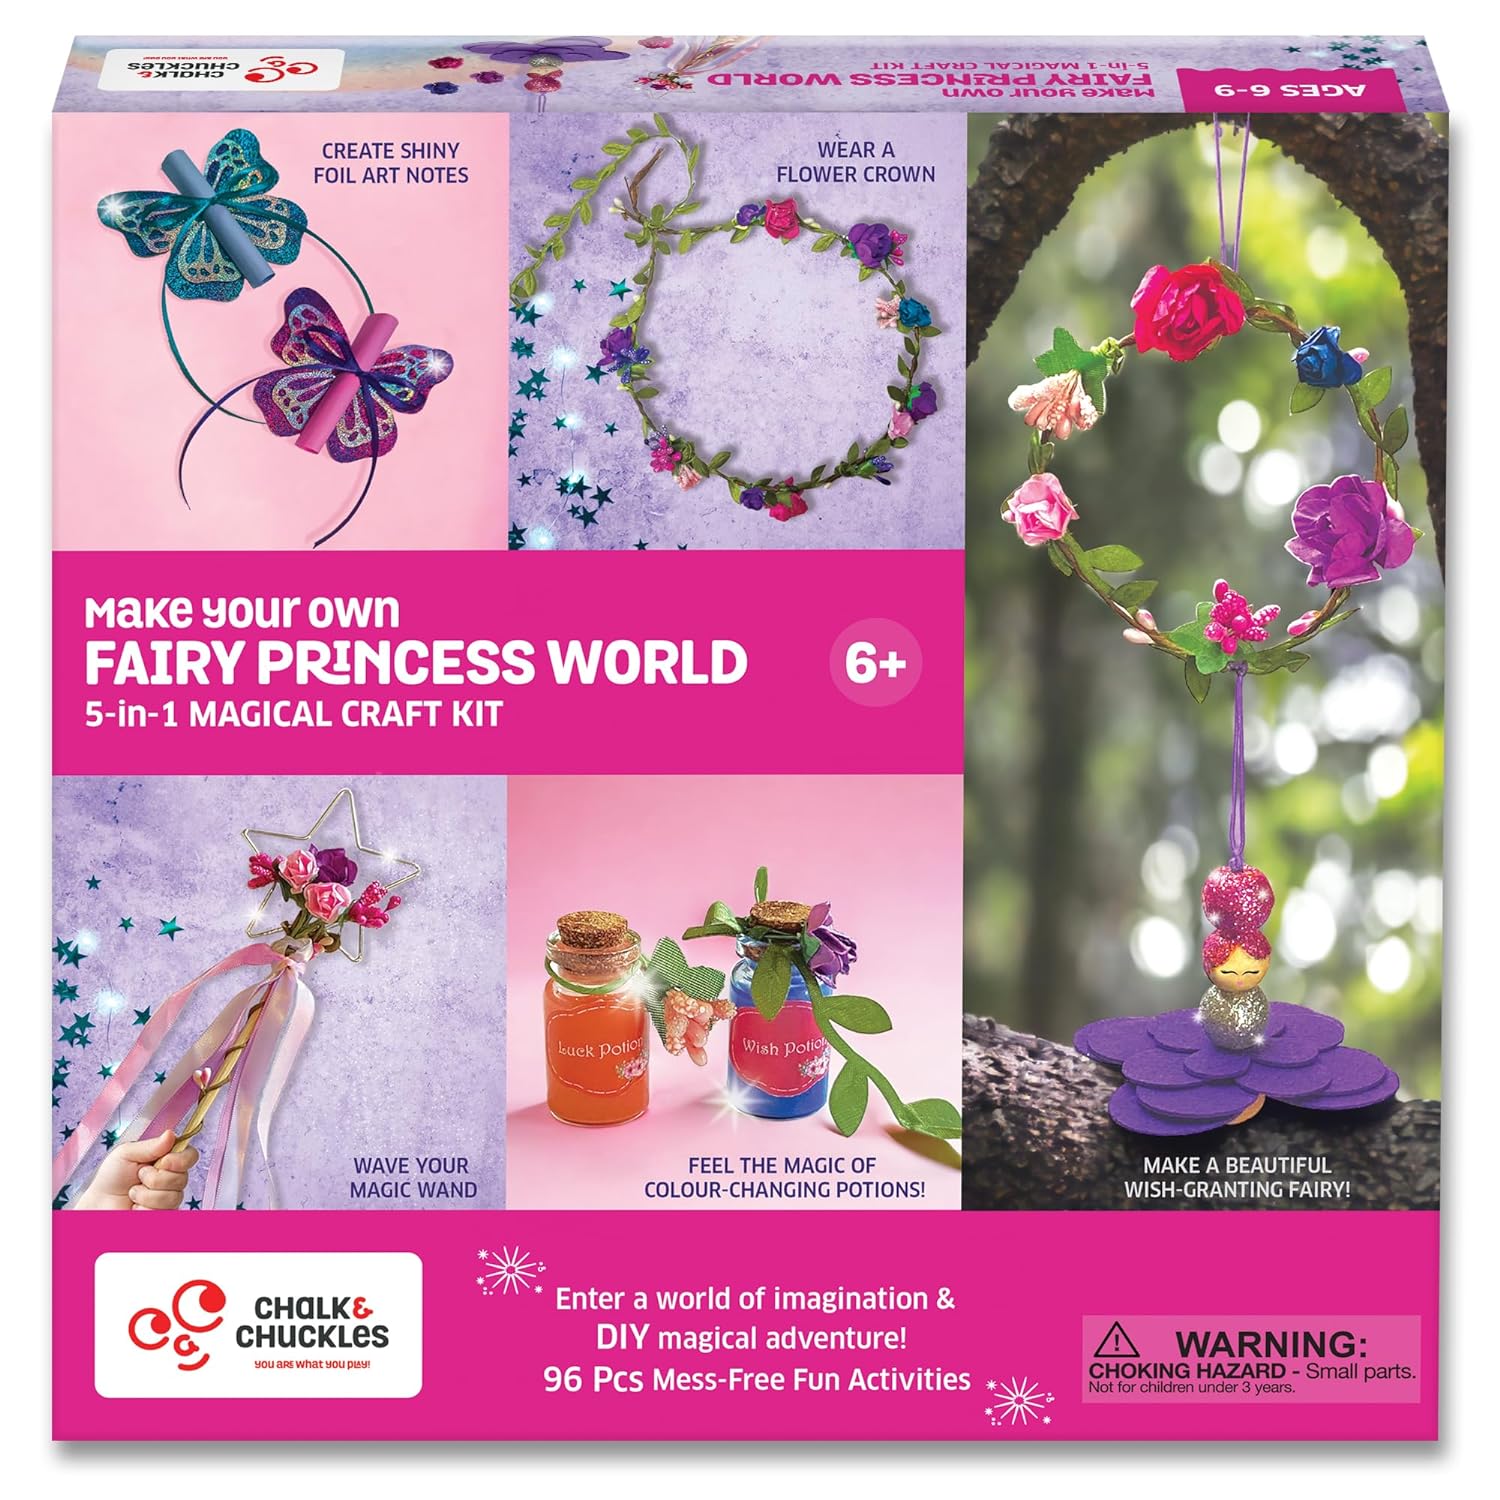  Foil Fun Art Kit for Kids: Foil Art Fairy Princess